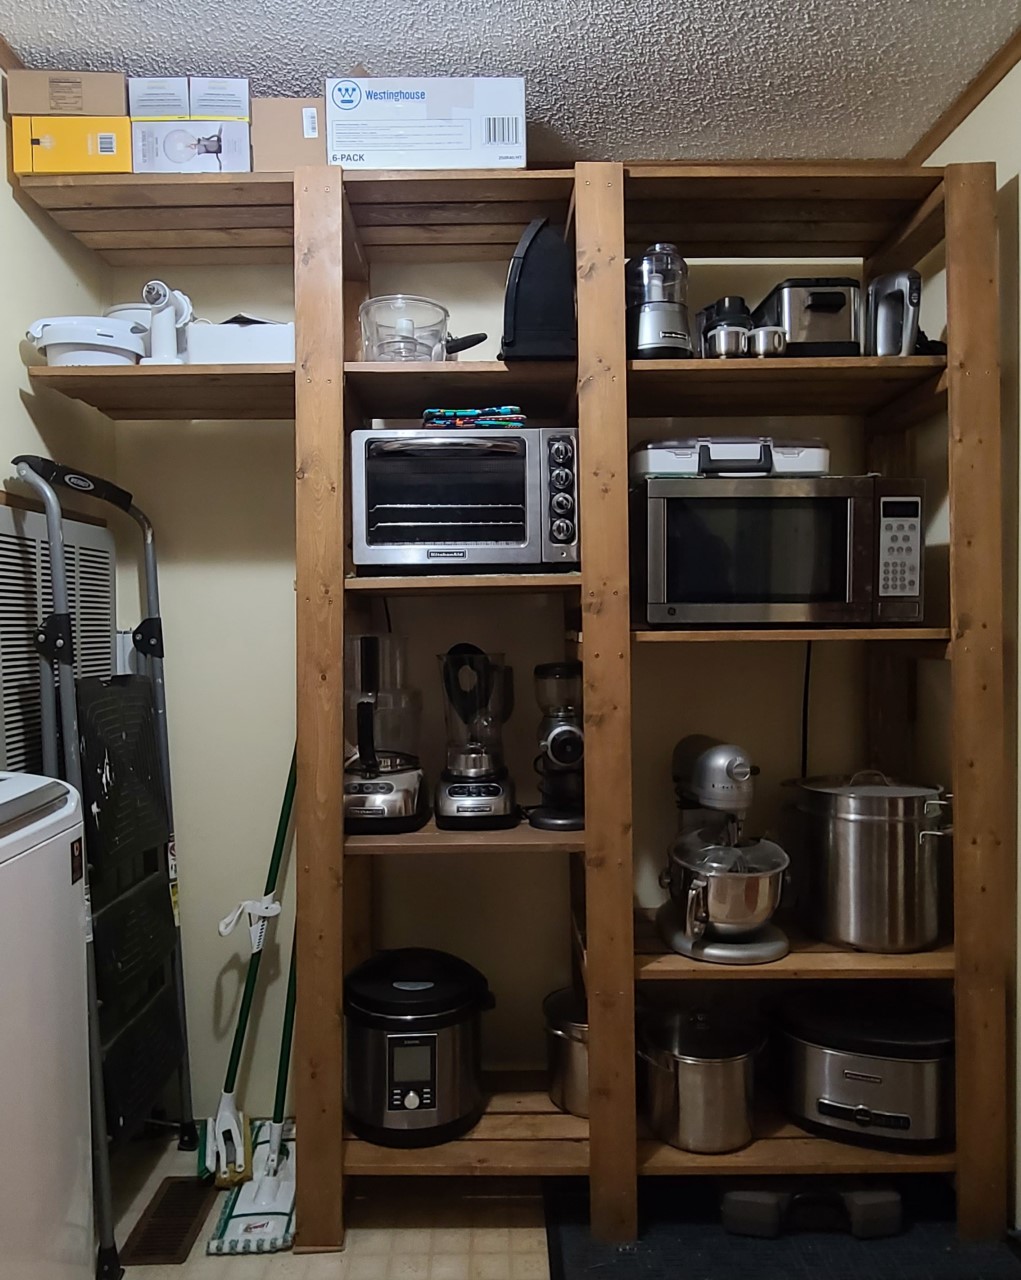  Kitchen Appliance Shelf